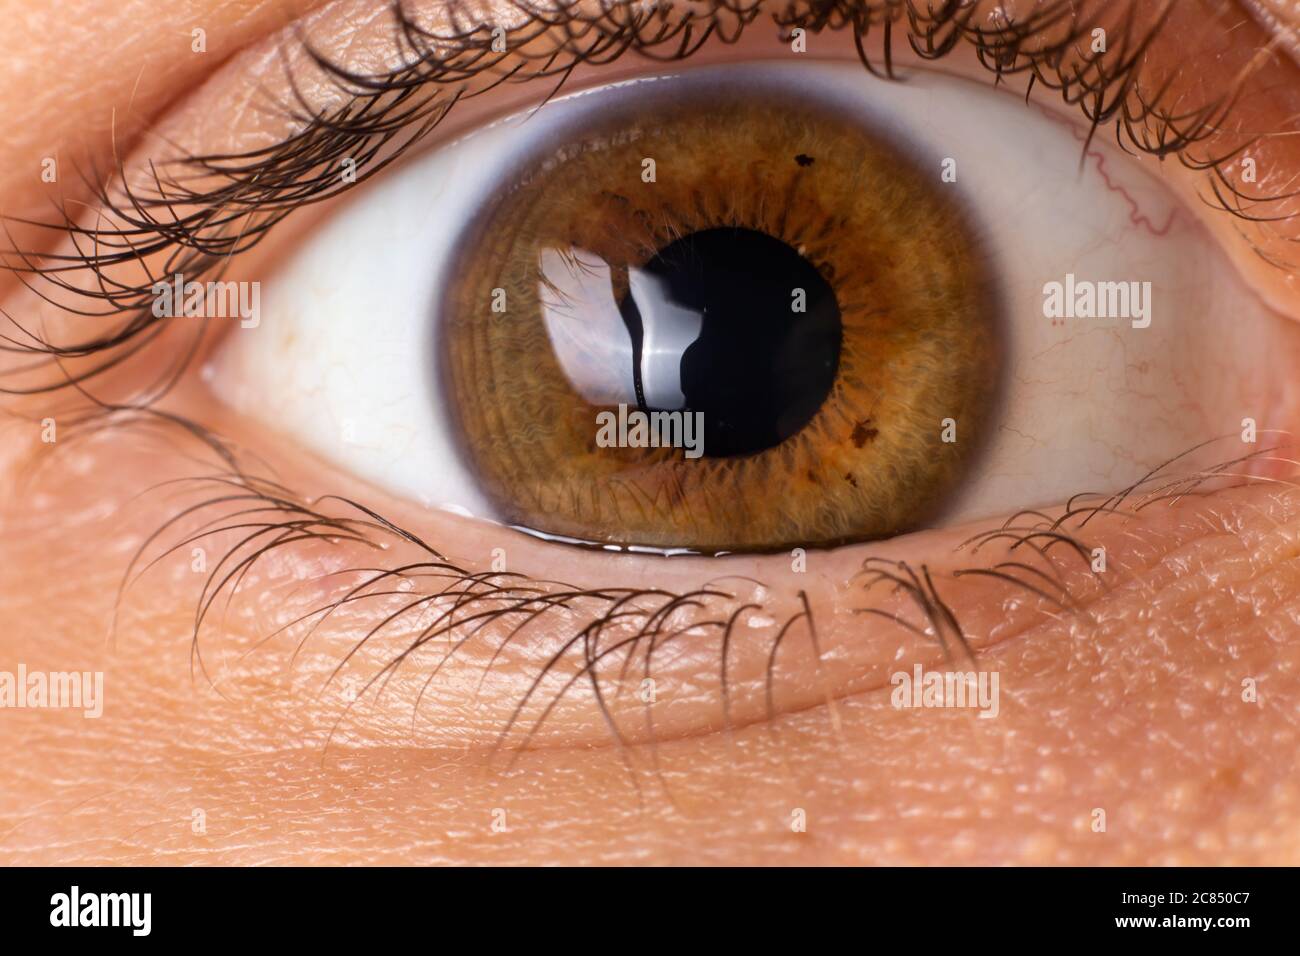 Macro eye photo. Keratoconus - eye disease, thinning of the cornea in the form of a cone. The cornea plastic. Stock Photo